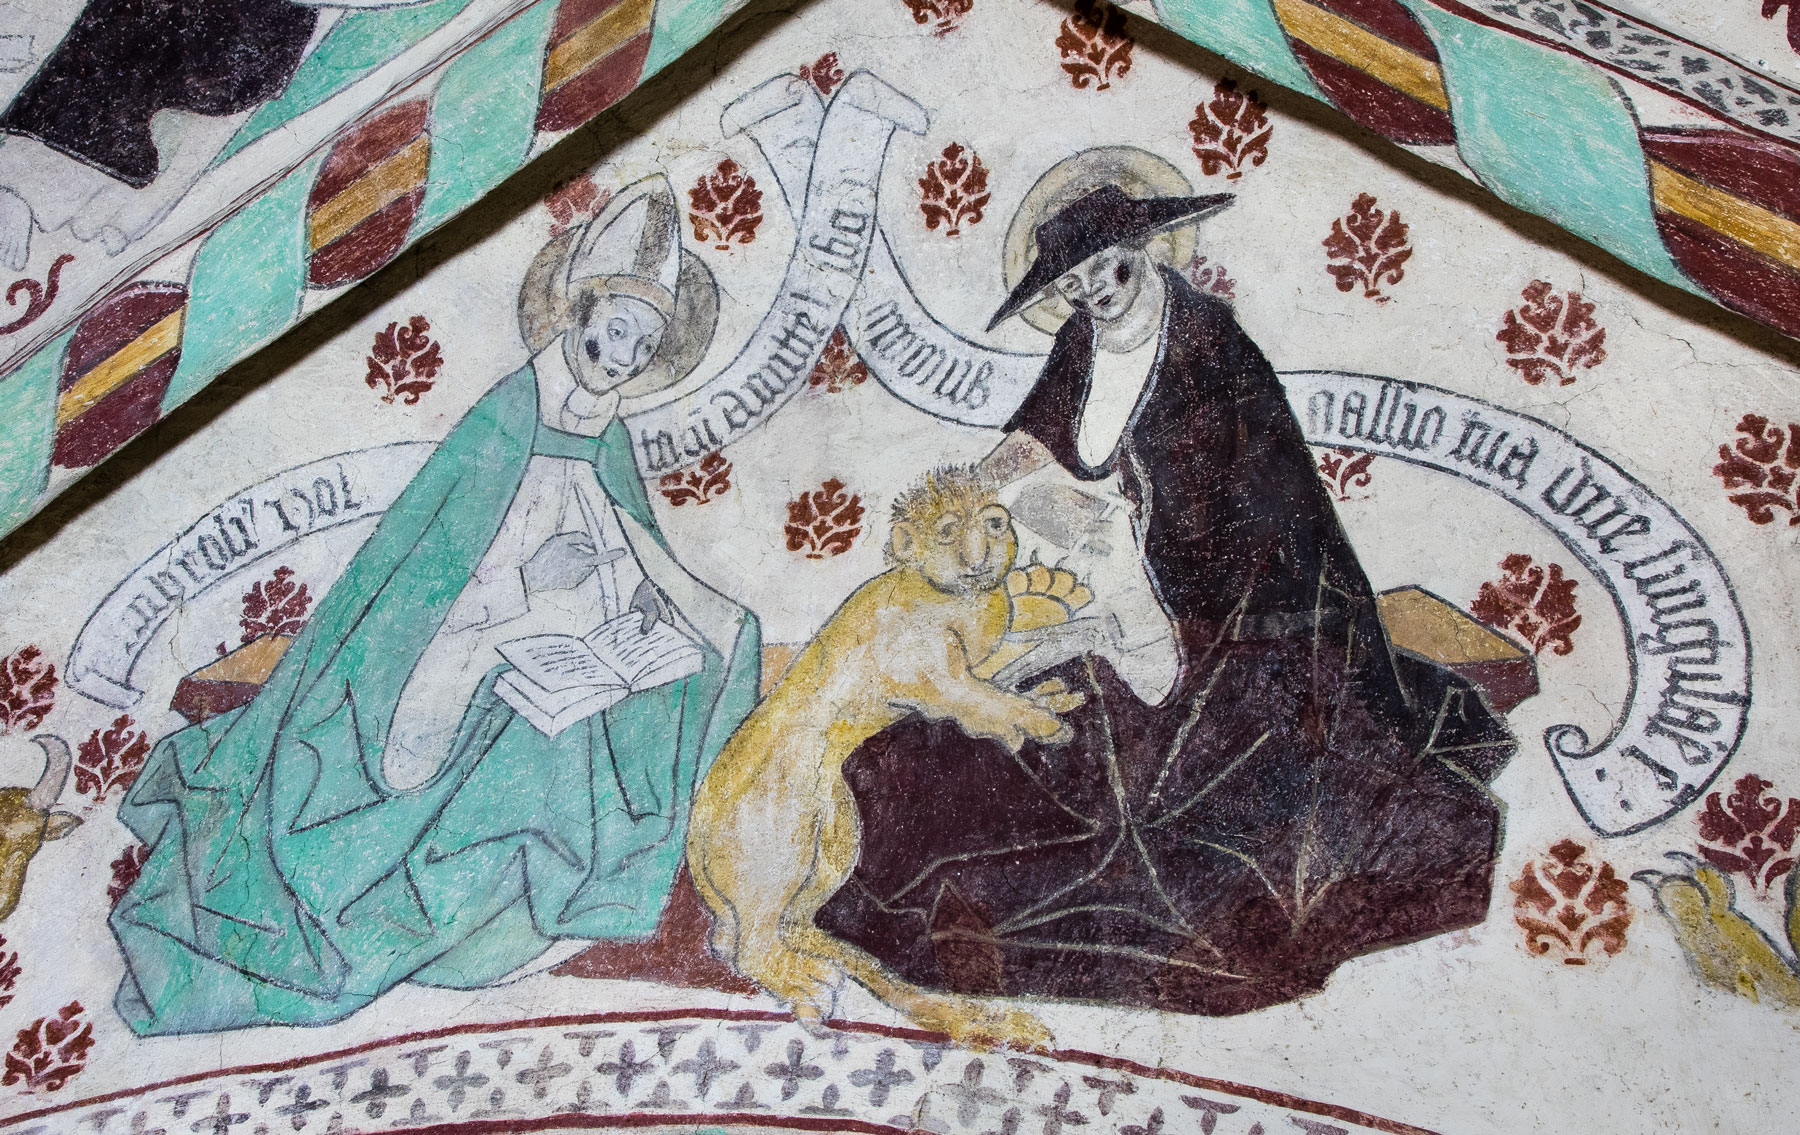 Ambrosius, biskop; Hieronymus, kardinal, med sin symbol lejonet - Yttergrans kyrka